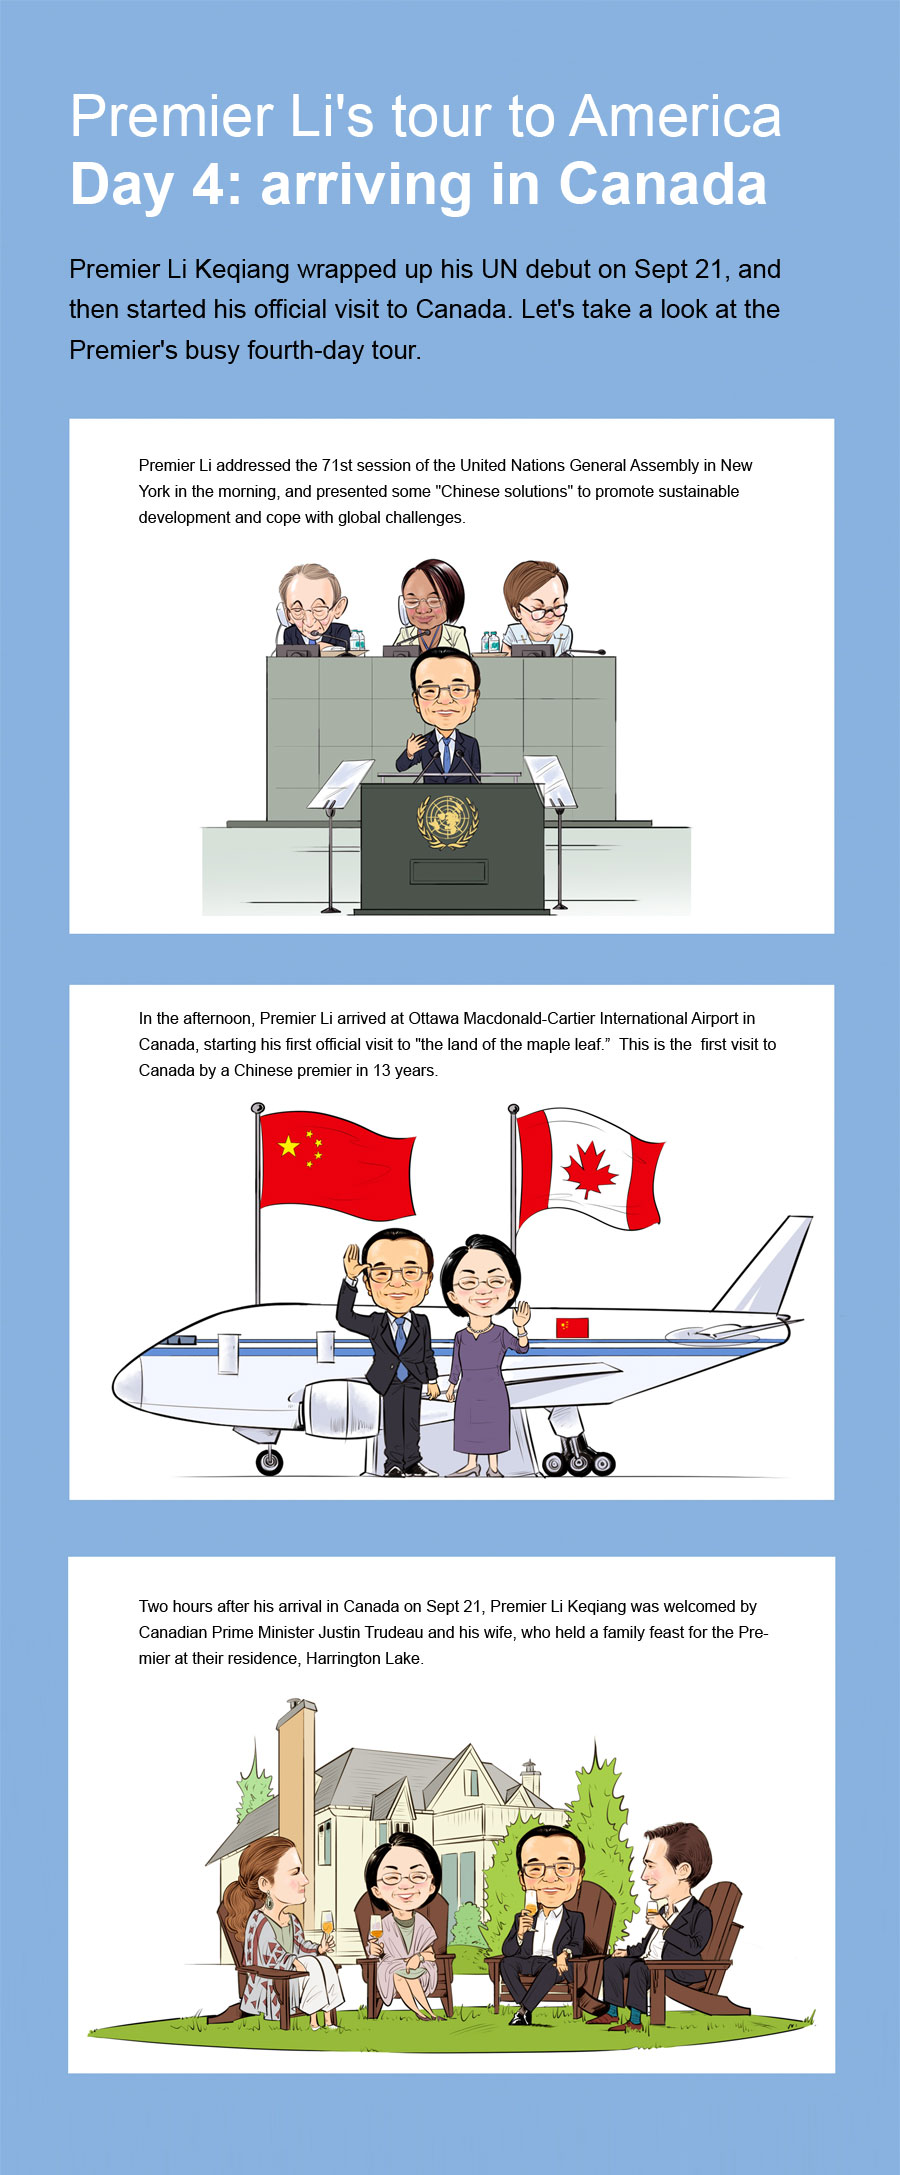 Premier Li's fourth-day tour to America